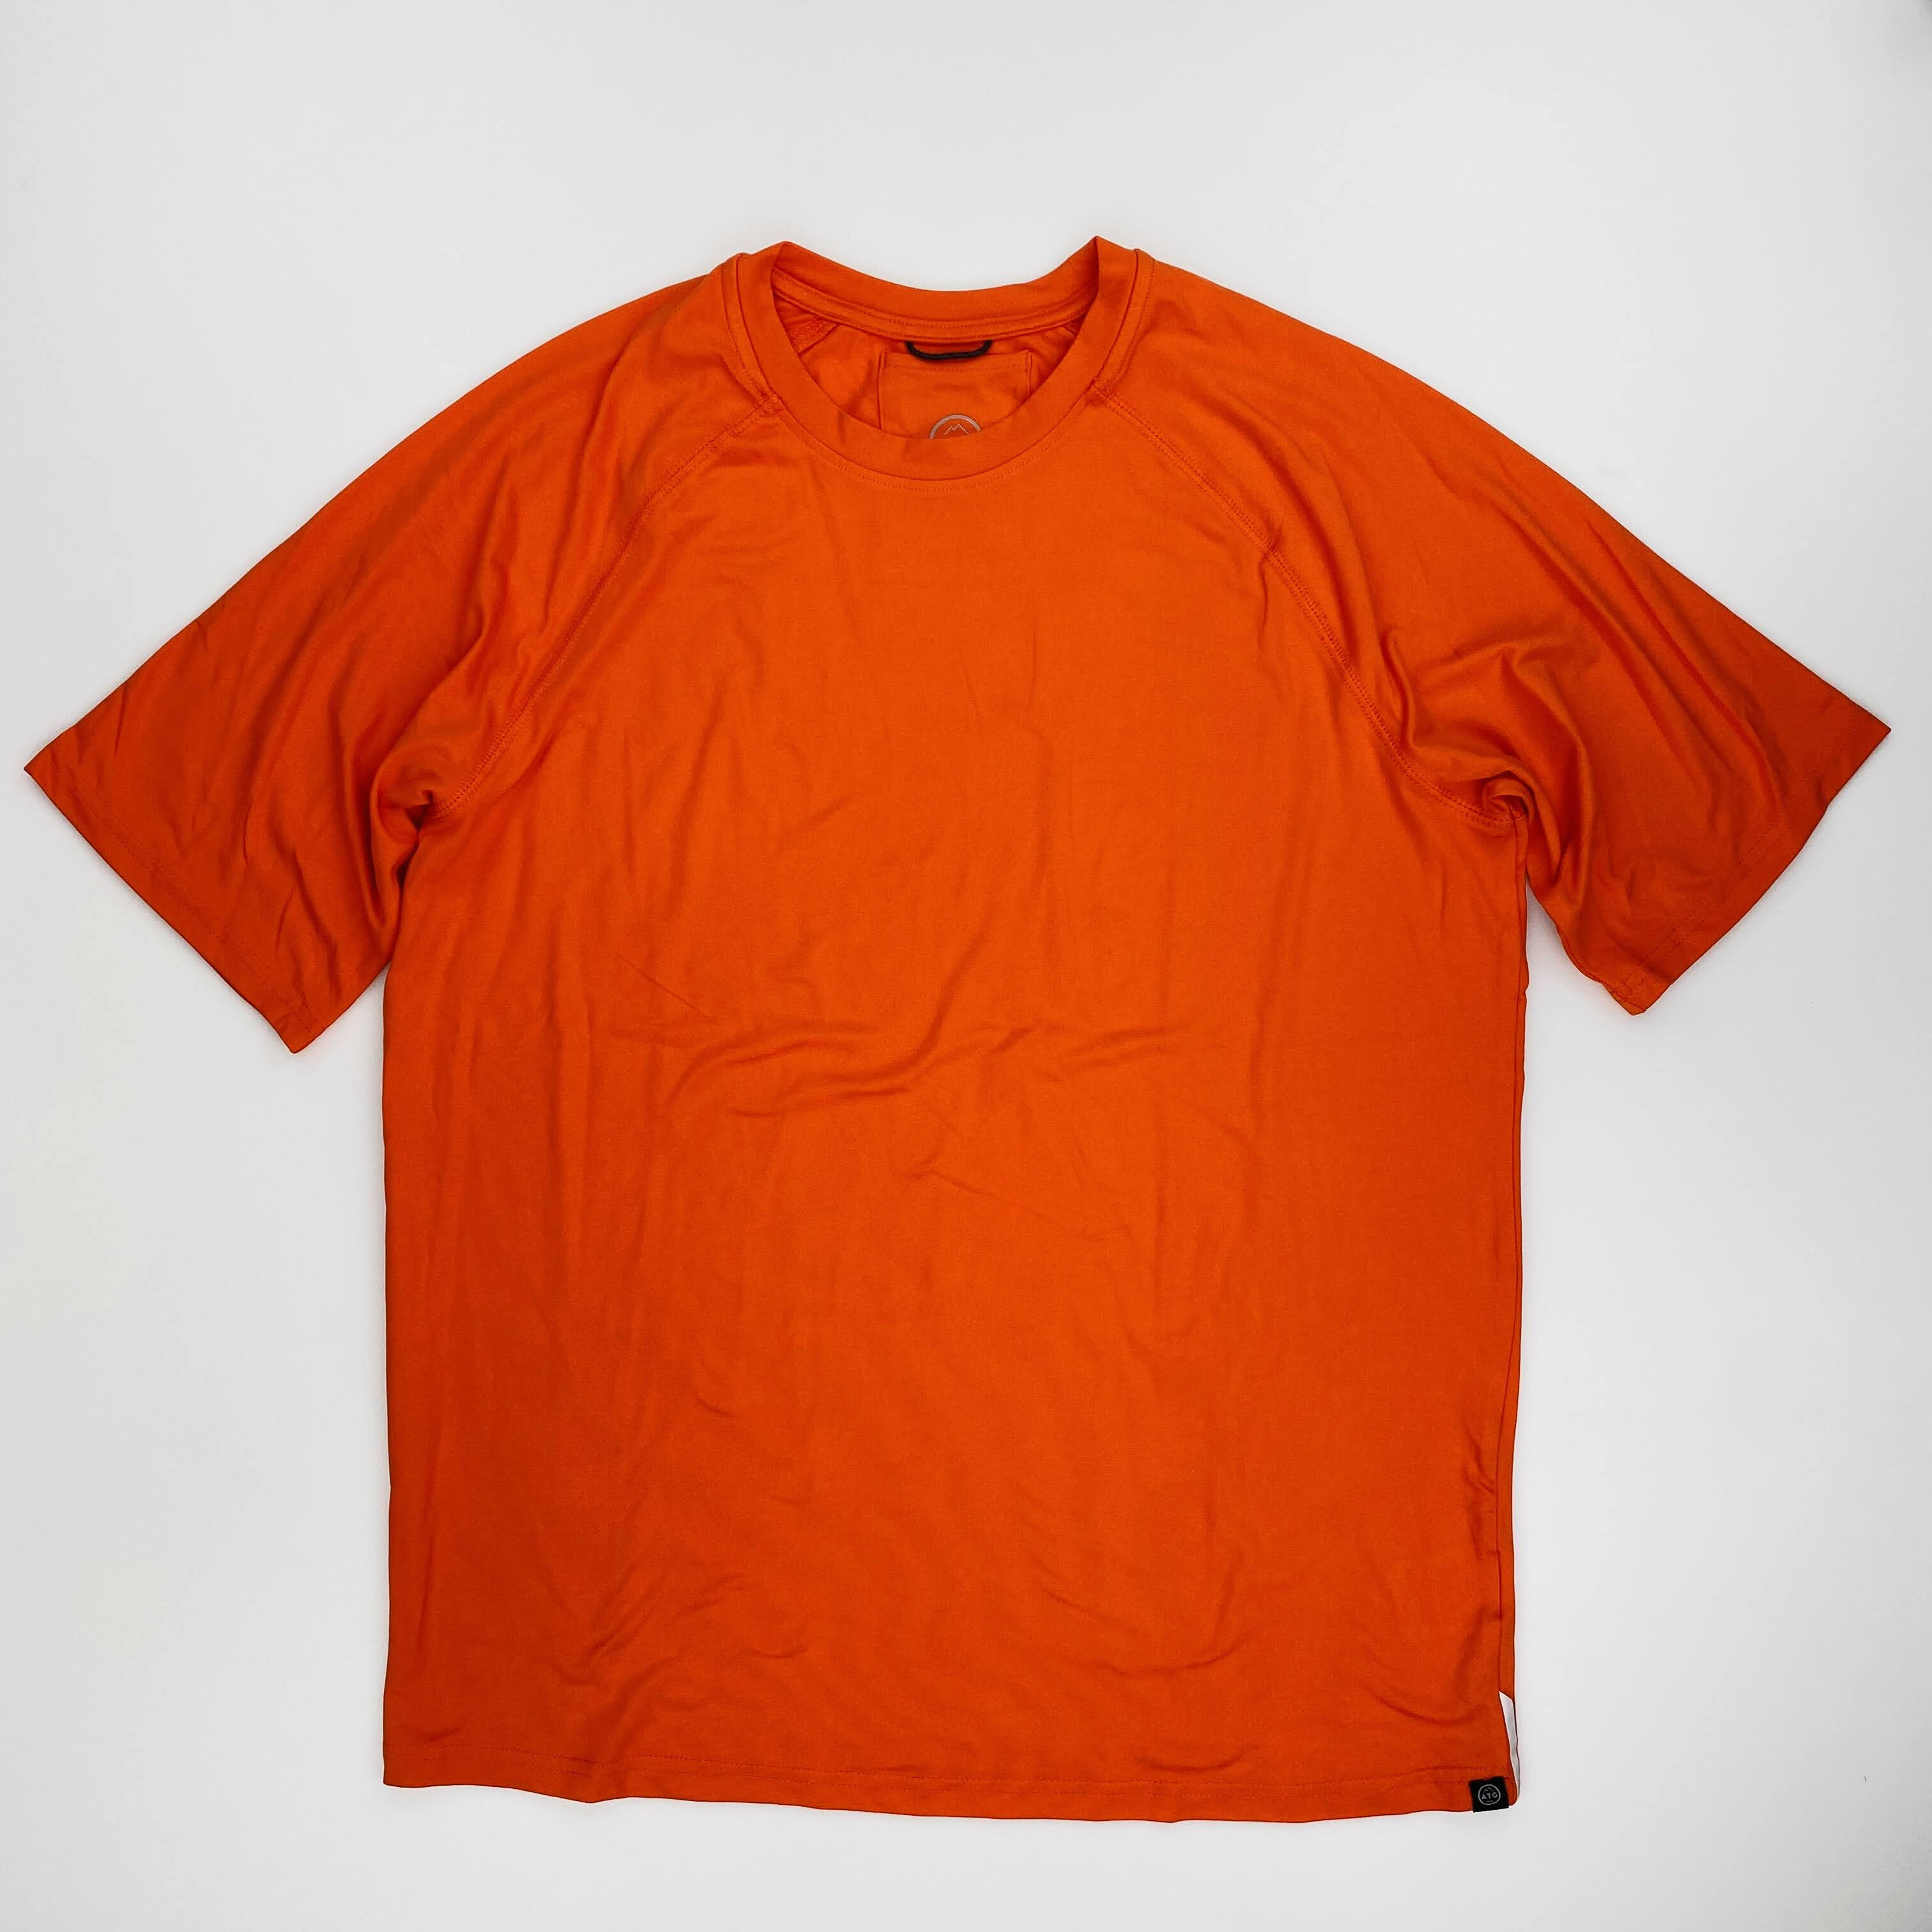 Wrangler Ss Performance Tee - Seconde main T-shirt homme - Orange - M | Hardloop